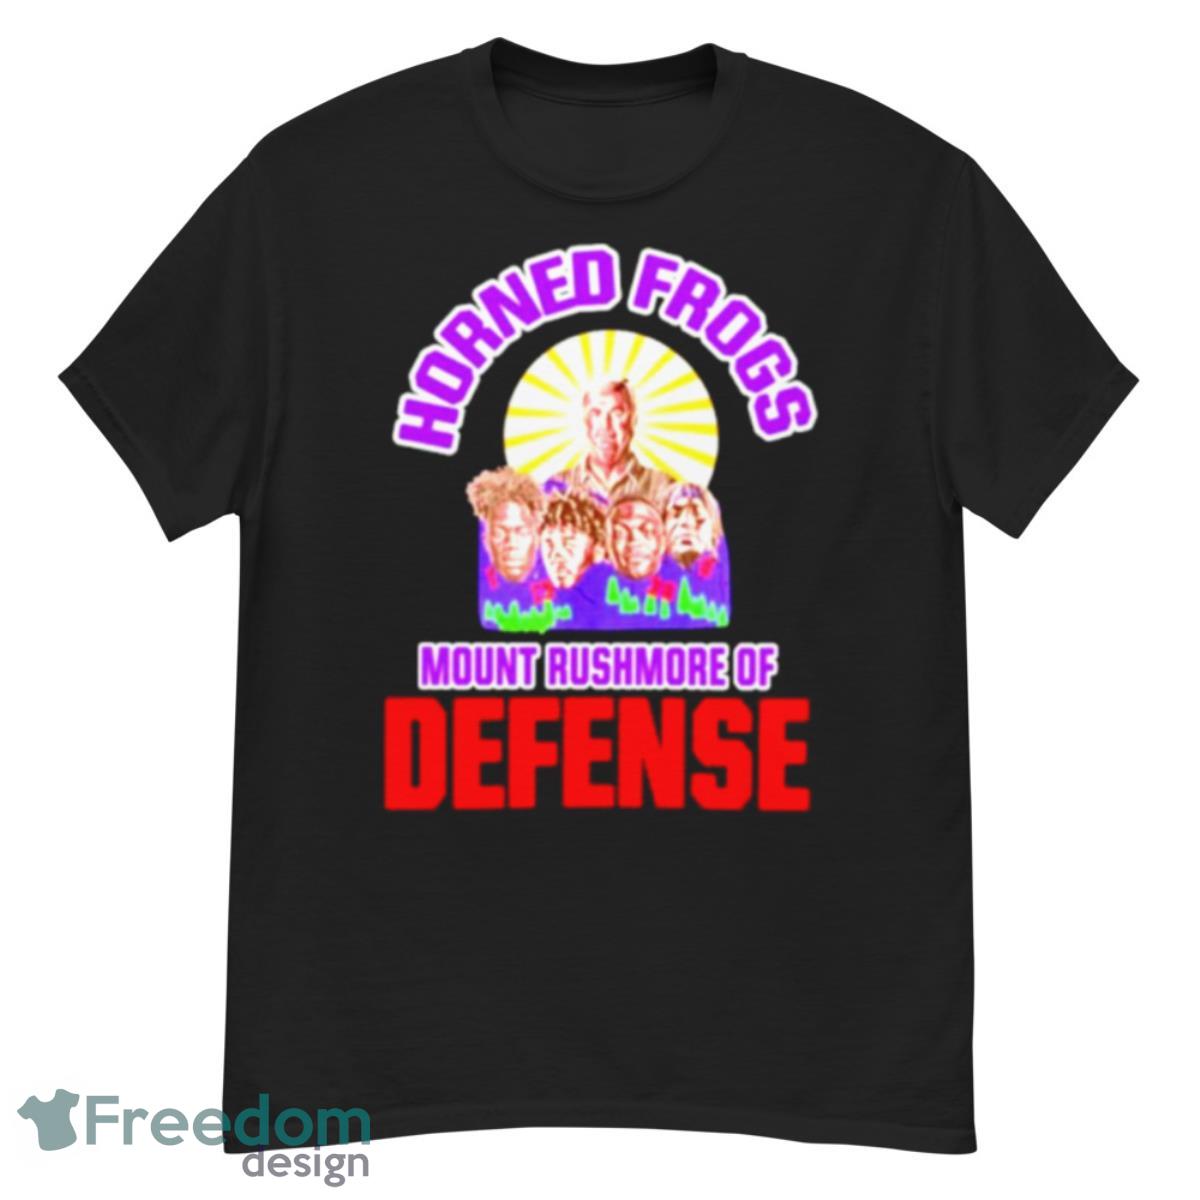 Horned frogs mount rushmore defense shirt - G500 Men’s Classic T-Shirt